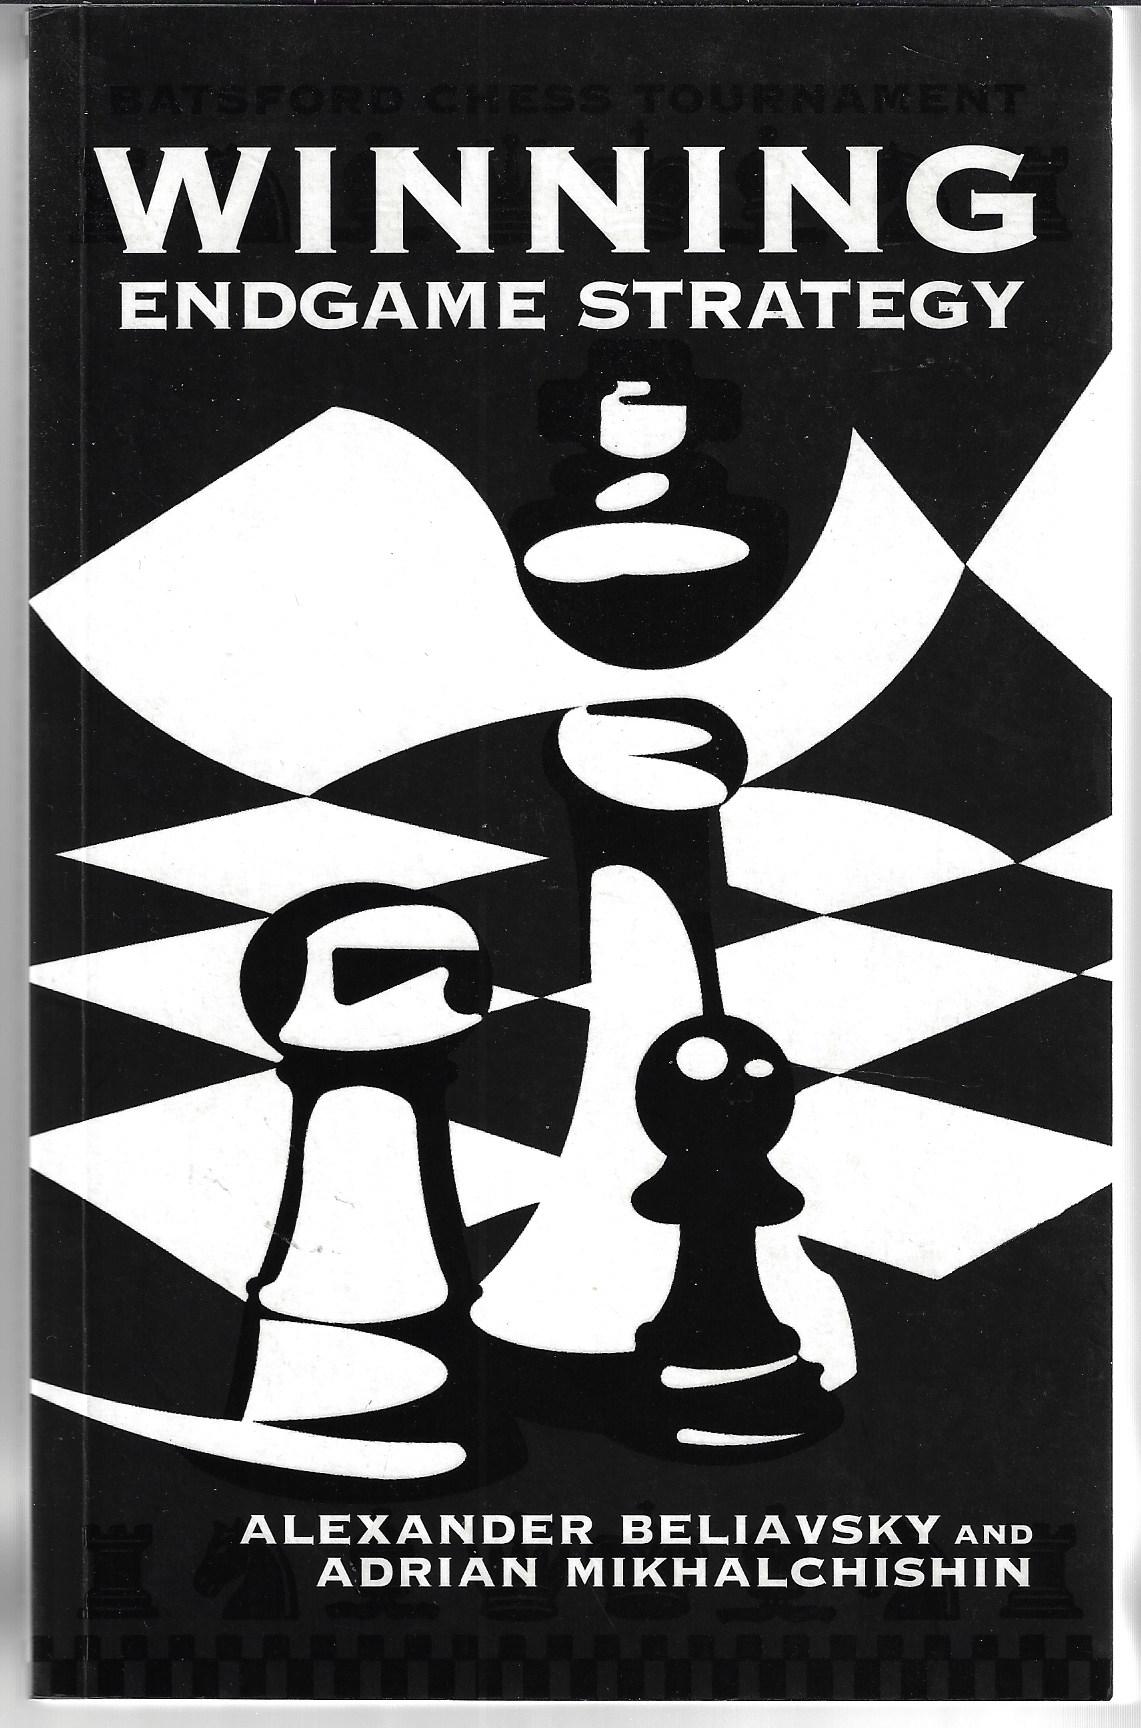 Beliasvsky, Alexander and Mikhalchishin, Adrian - Winning endgame strategy